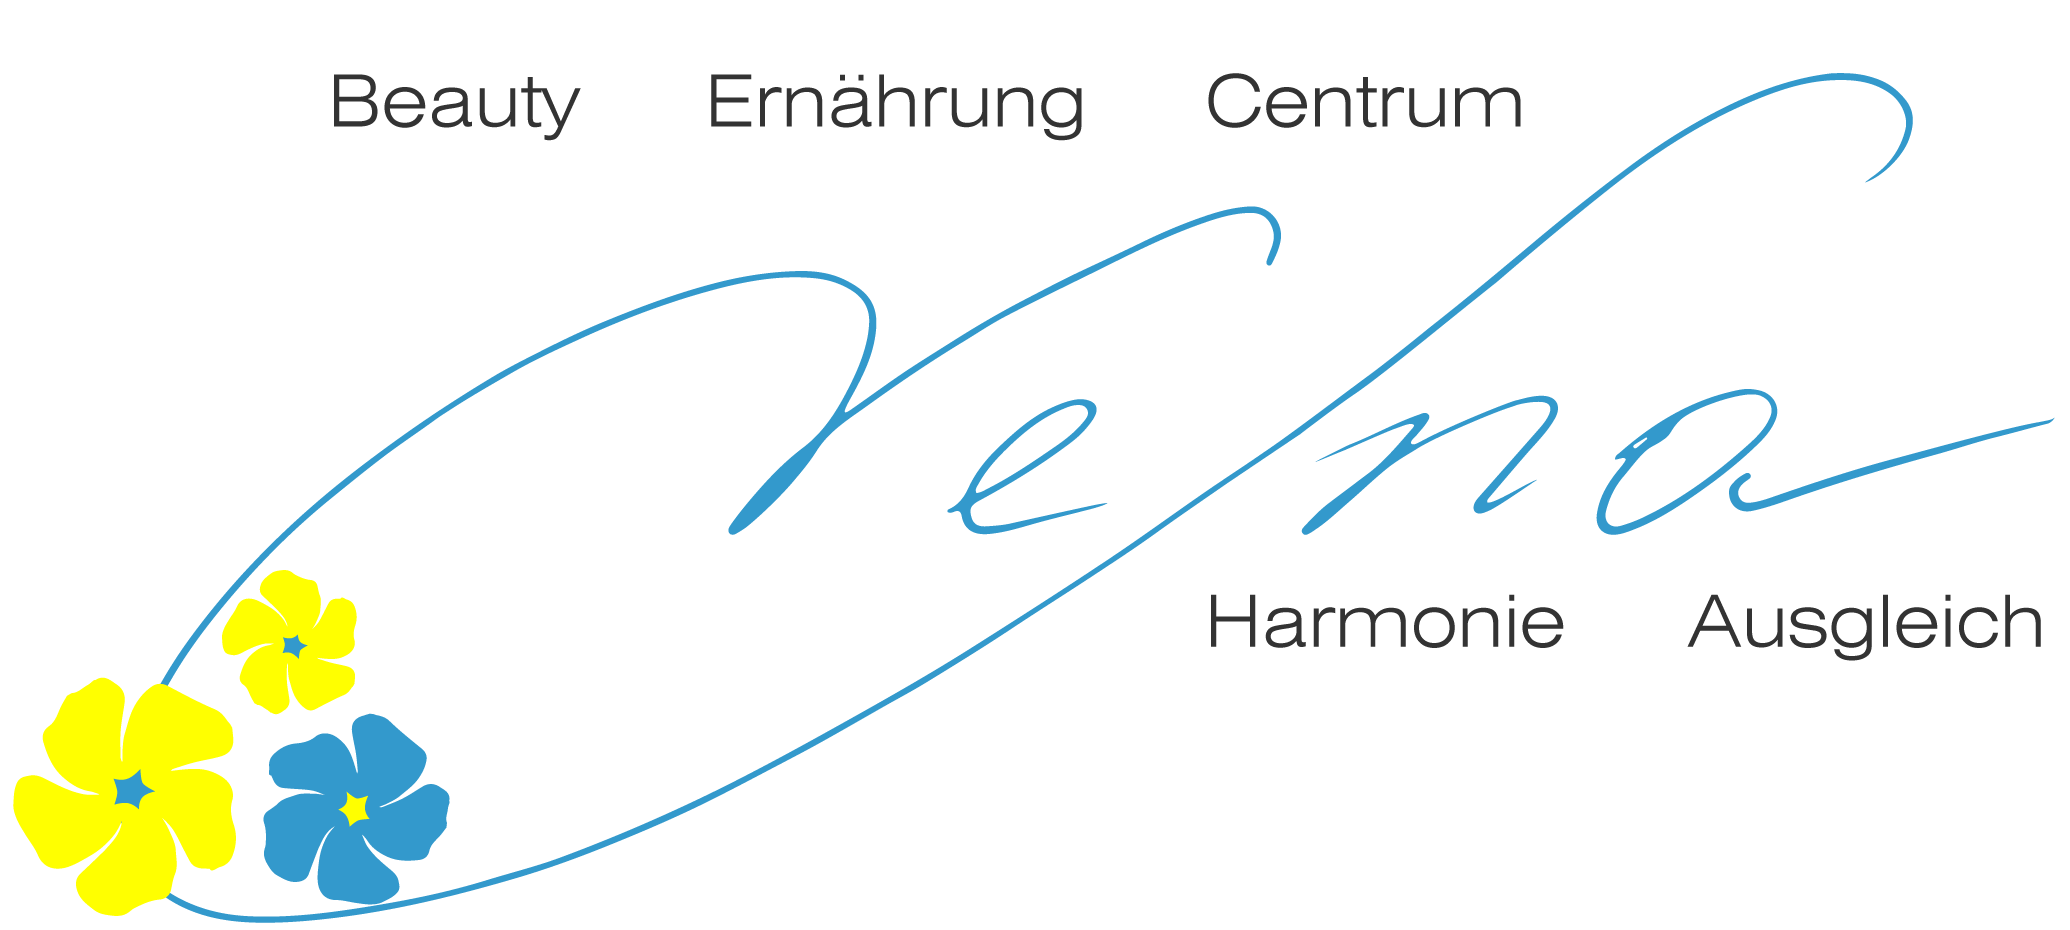 VESNA Beauty Ernährung Centrum Harmonie Ausgleich -  Logo